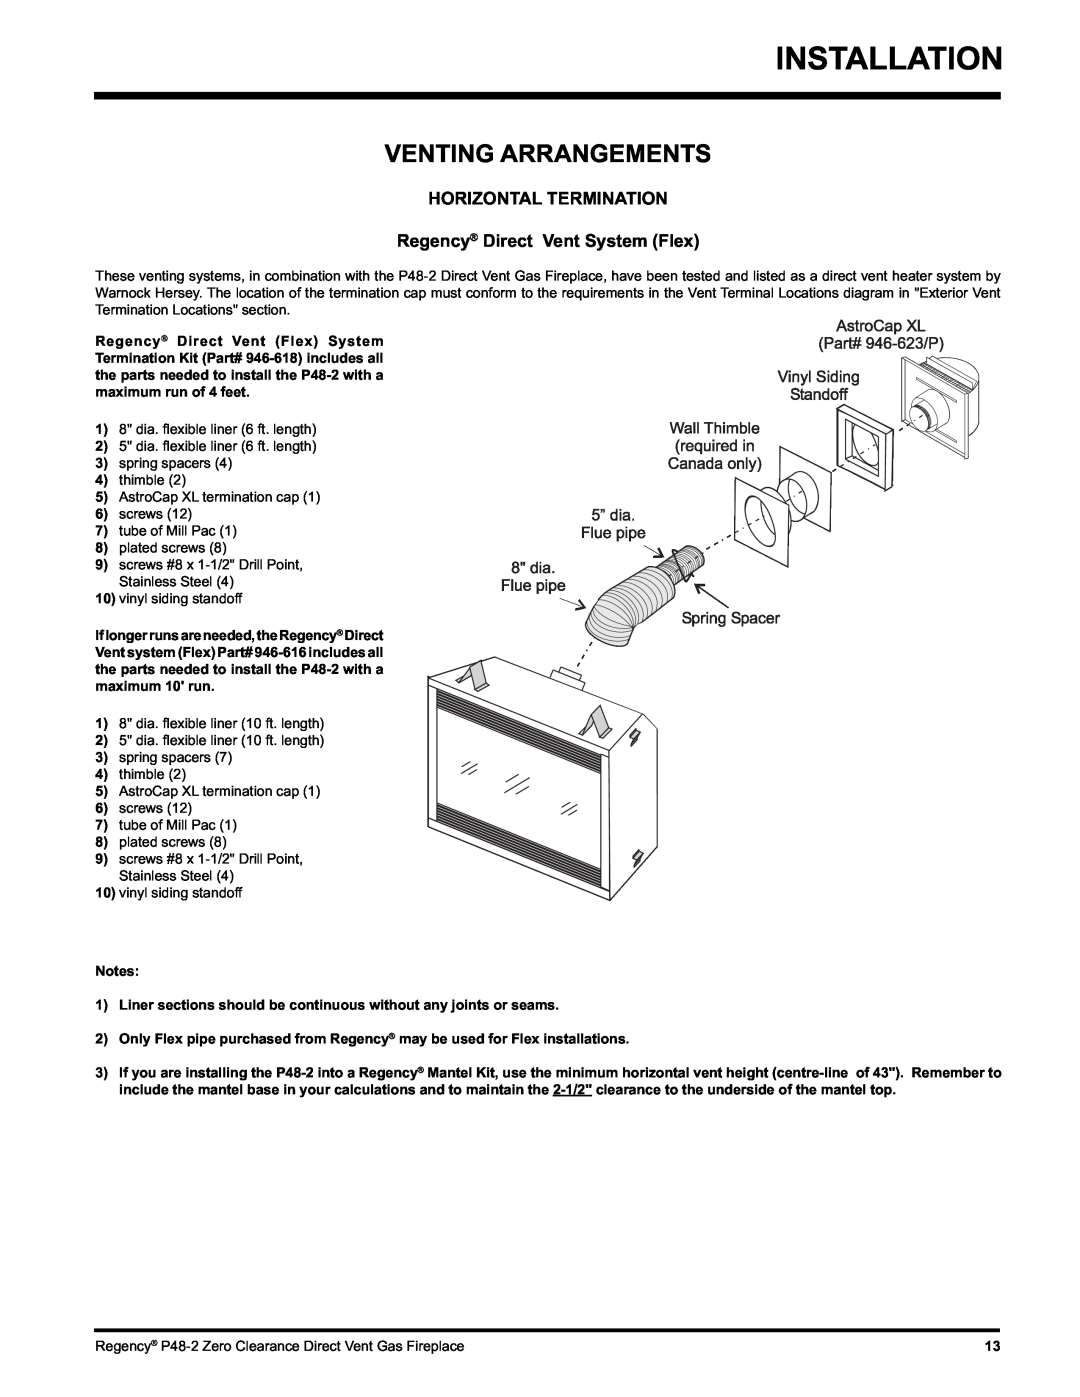 Regency P48-2 Installation, Venting Arrangements, Horizontal Termination, Regency Direct Vent System Flex, Notes 